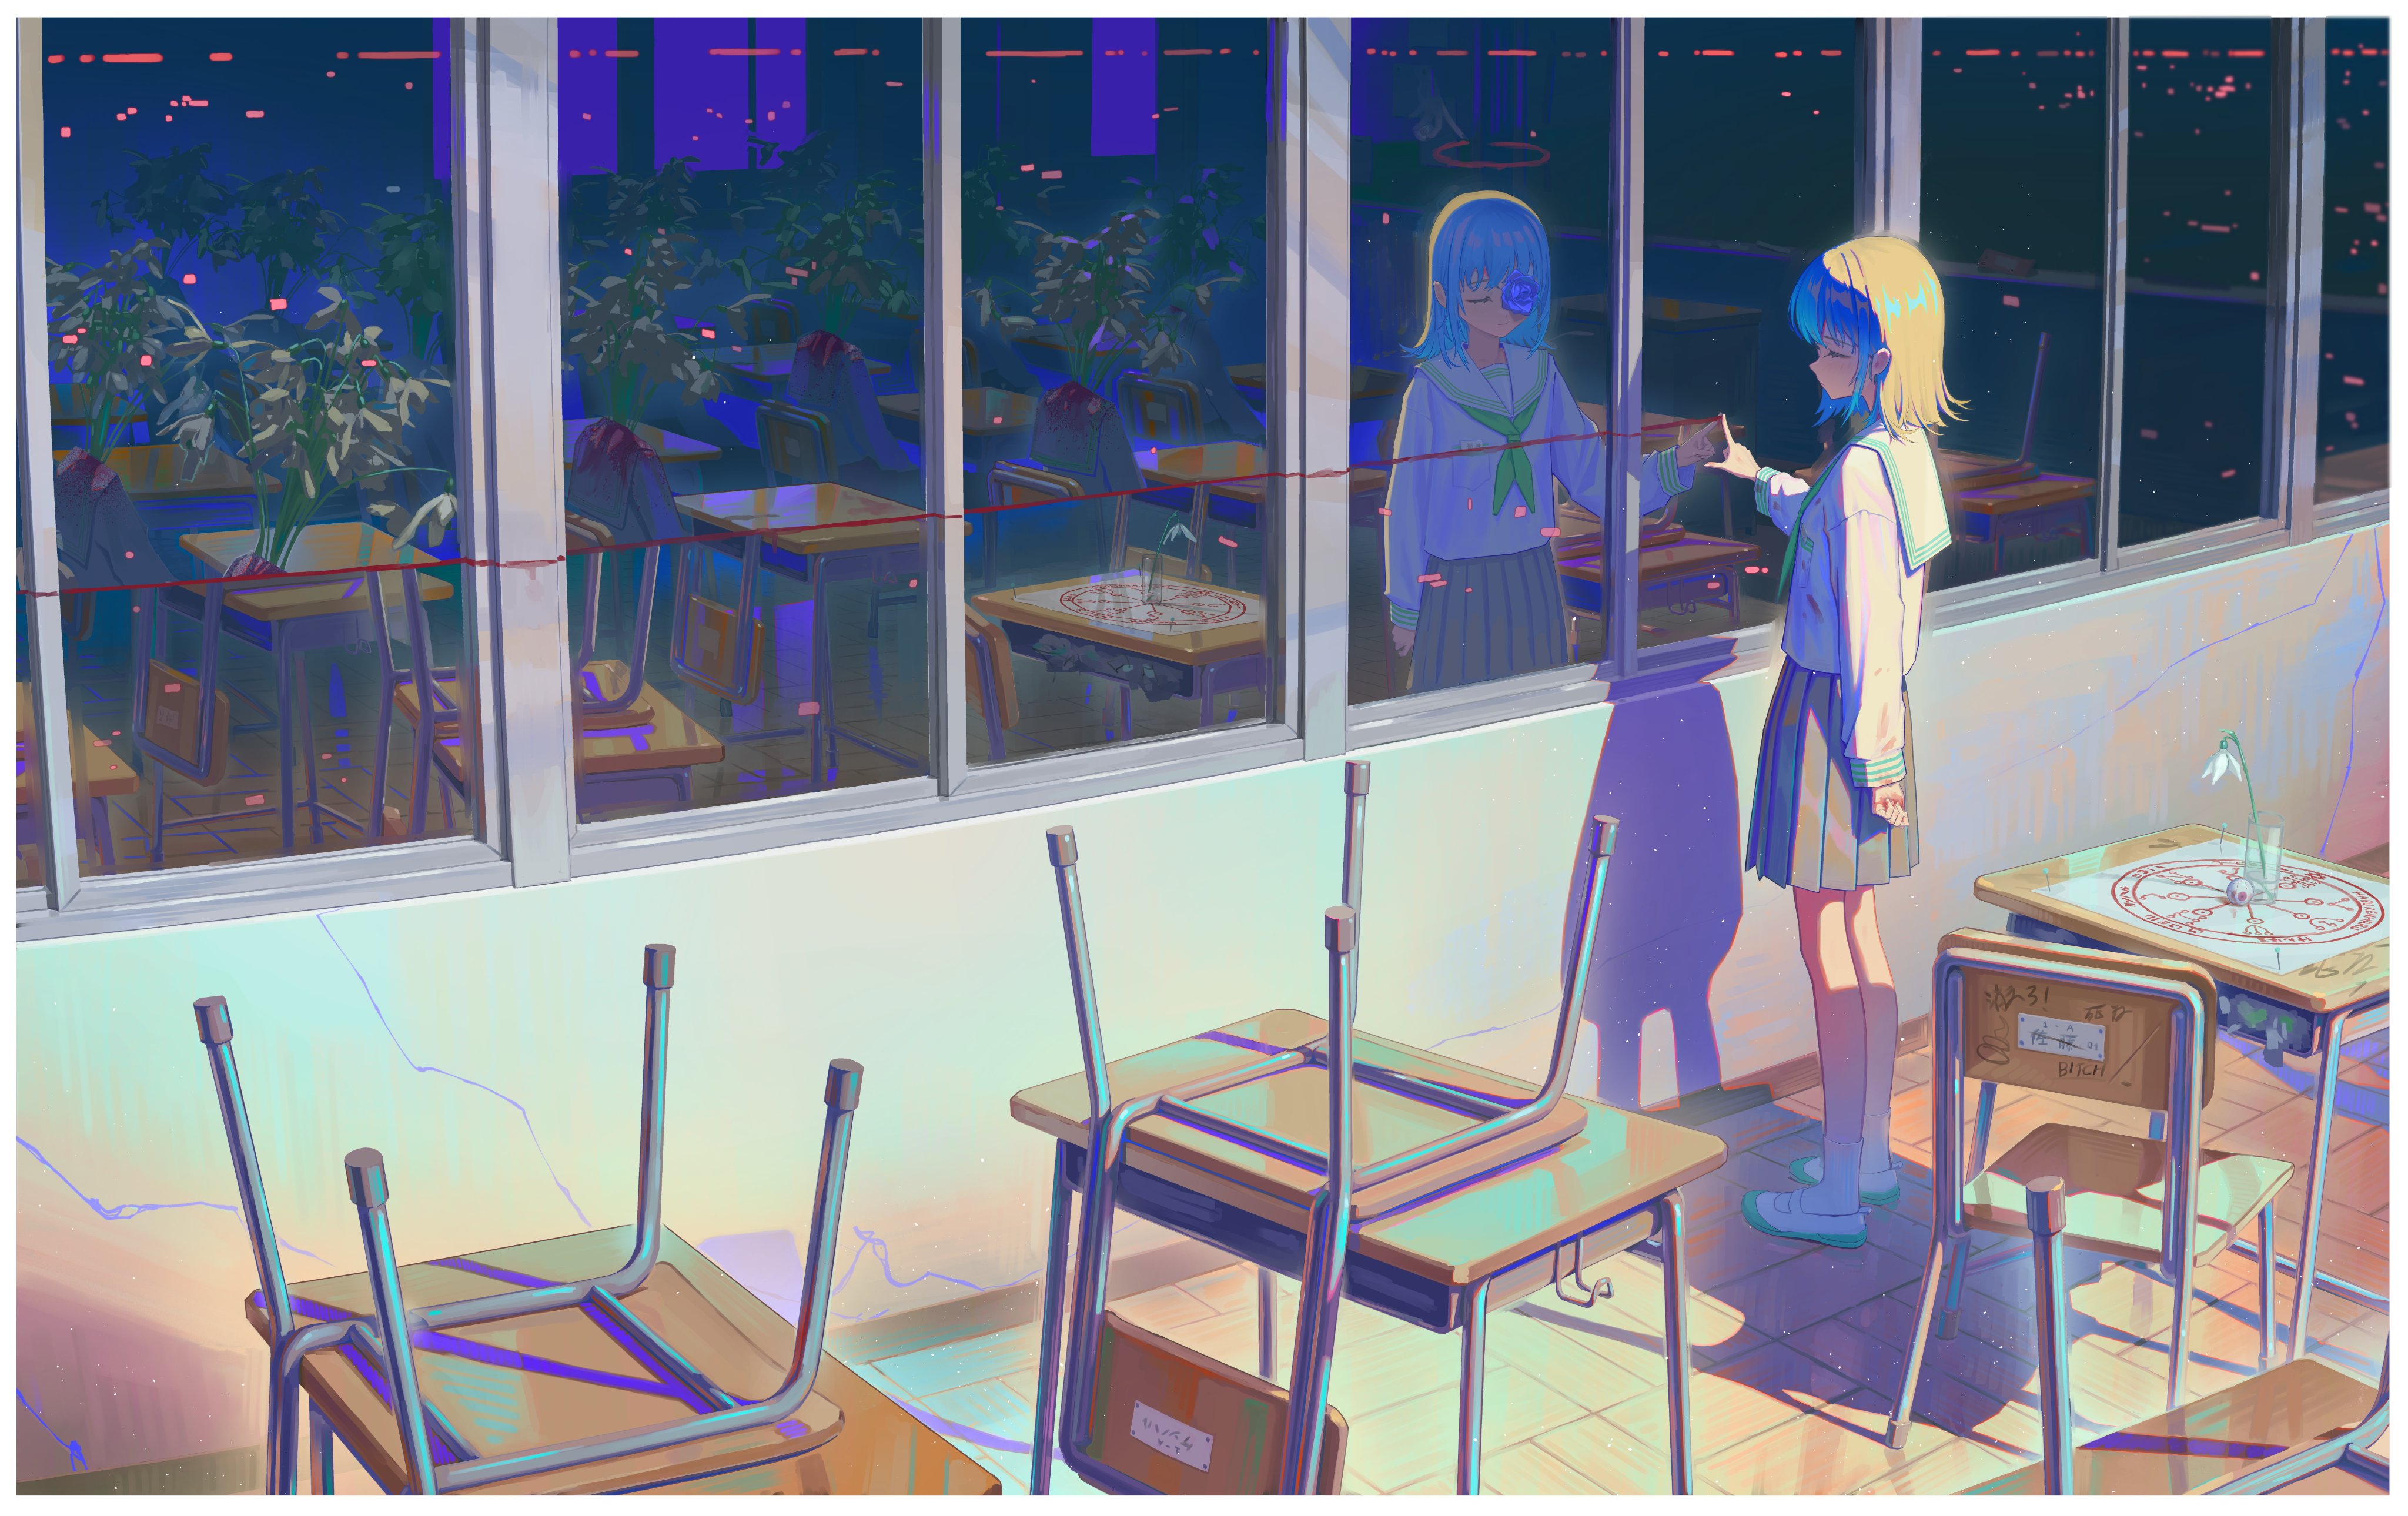 Anime 4096x2579 anime girls artwork schoolgirl school uniform reflection classroom window blue rose